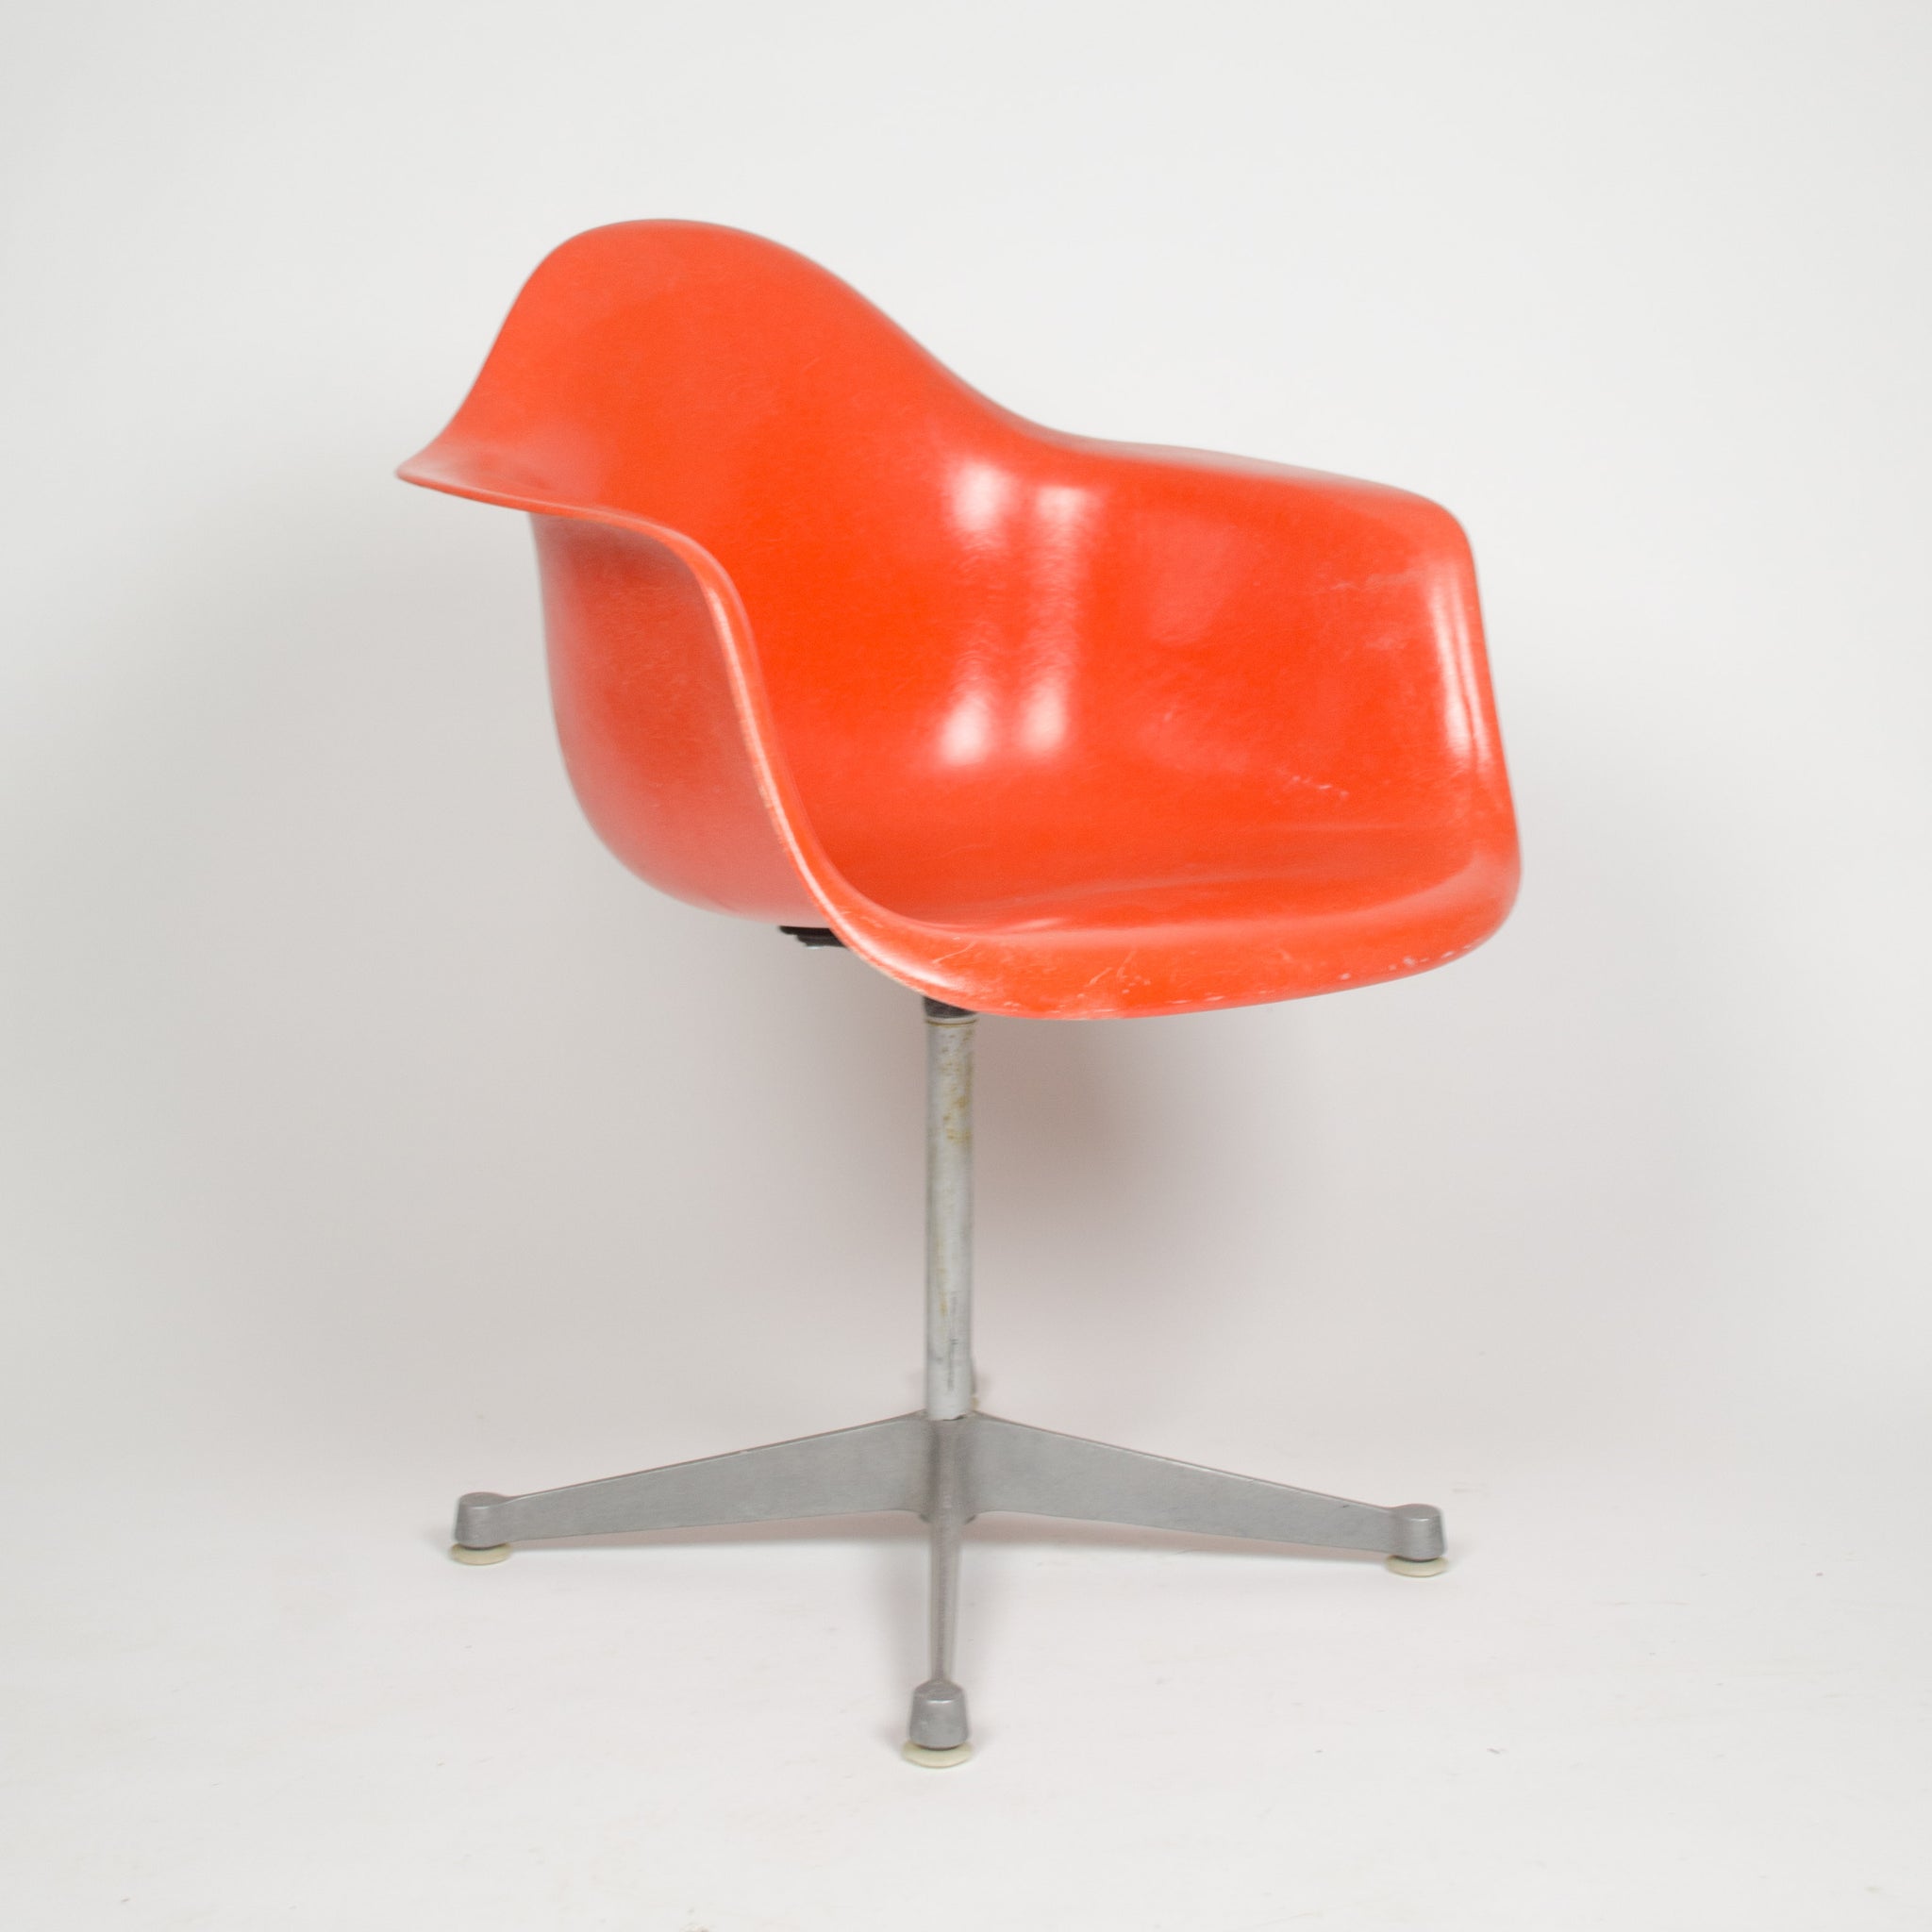 SOLD Eames Herman Miller Red / Orange Fiberglass Shell Chair